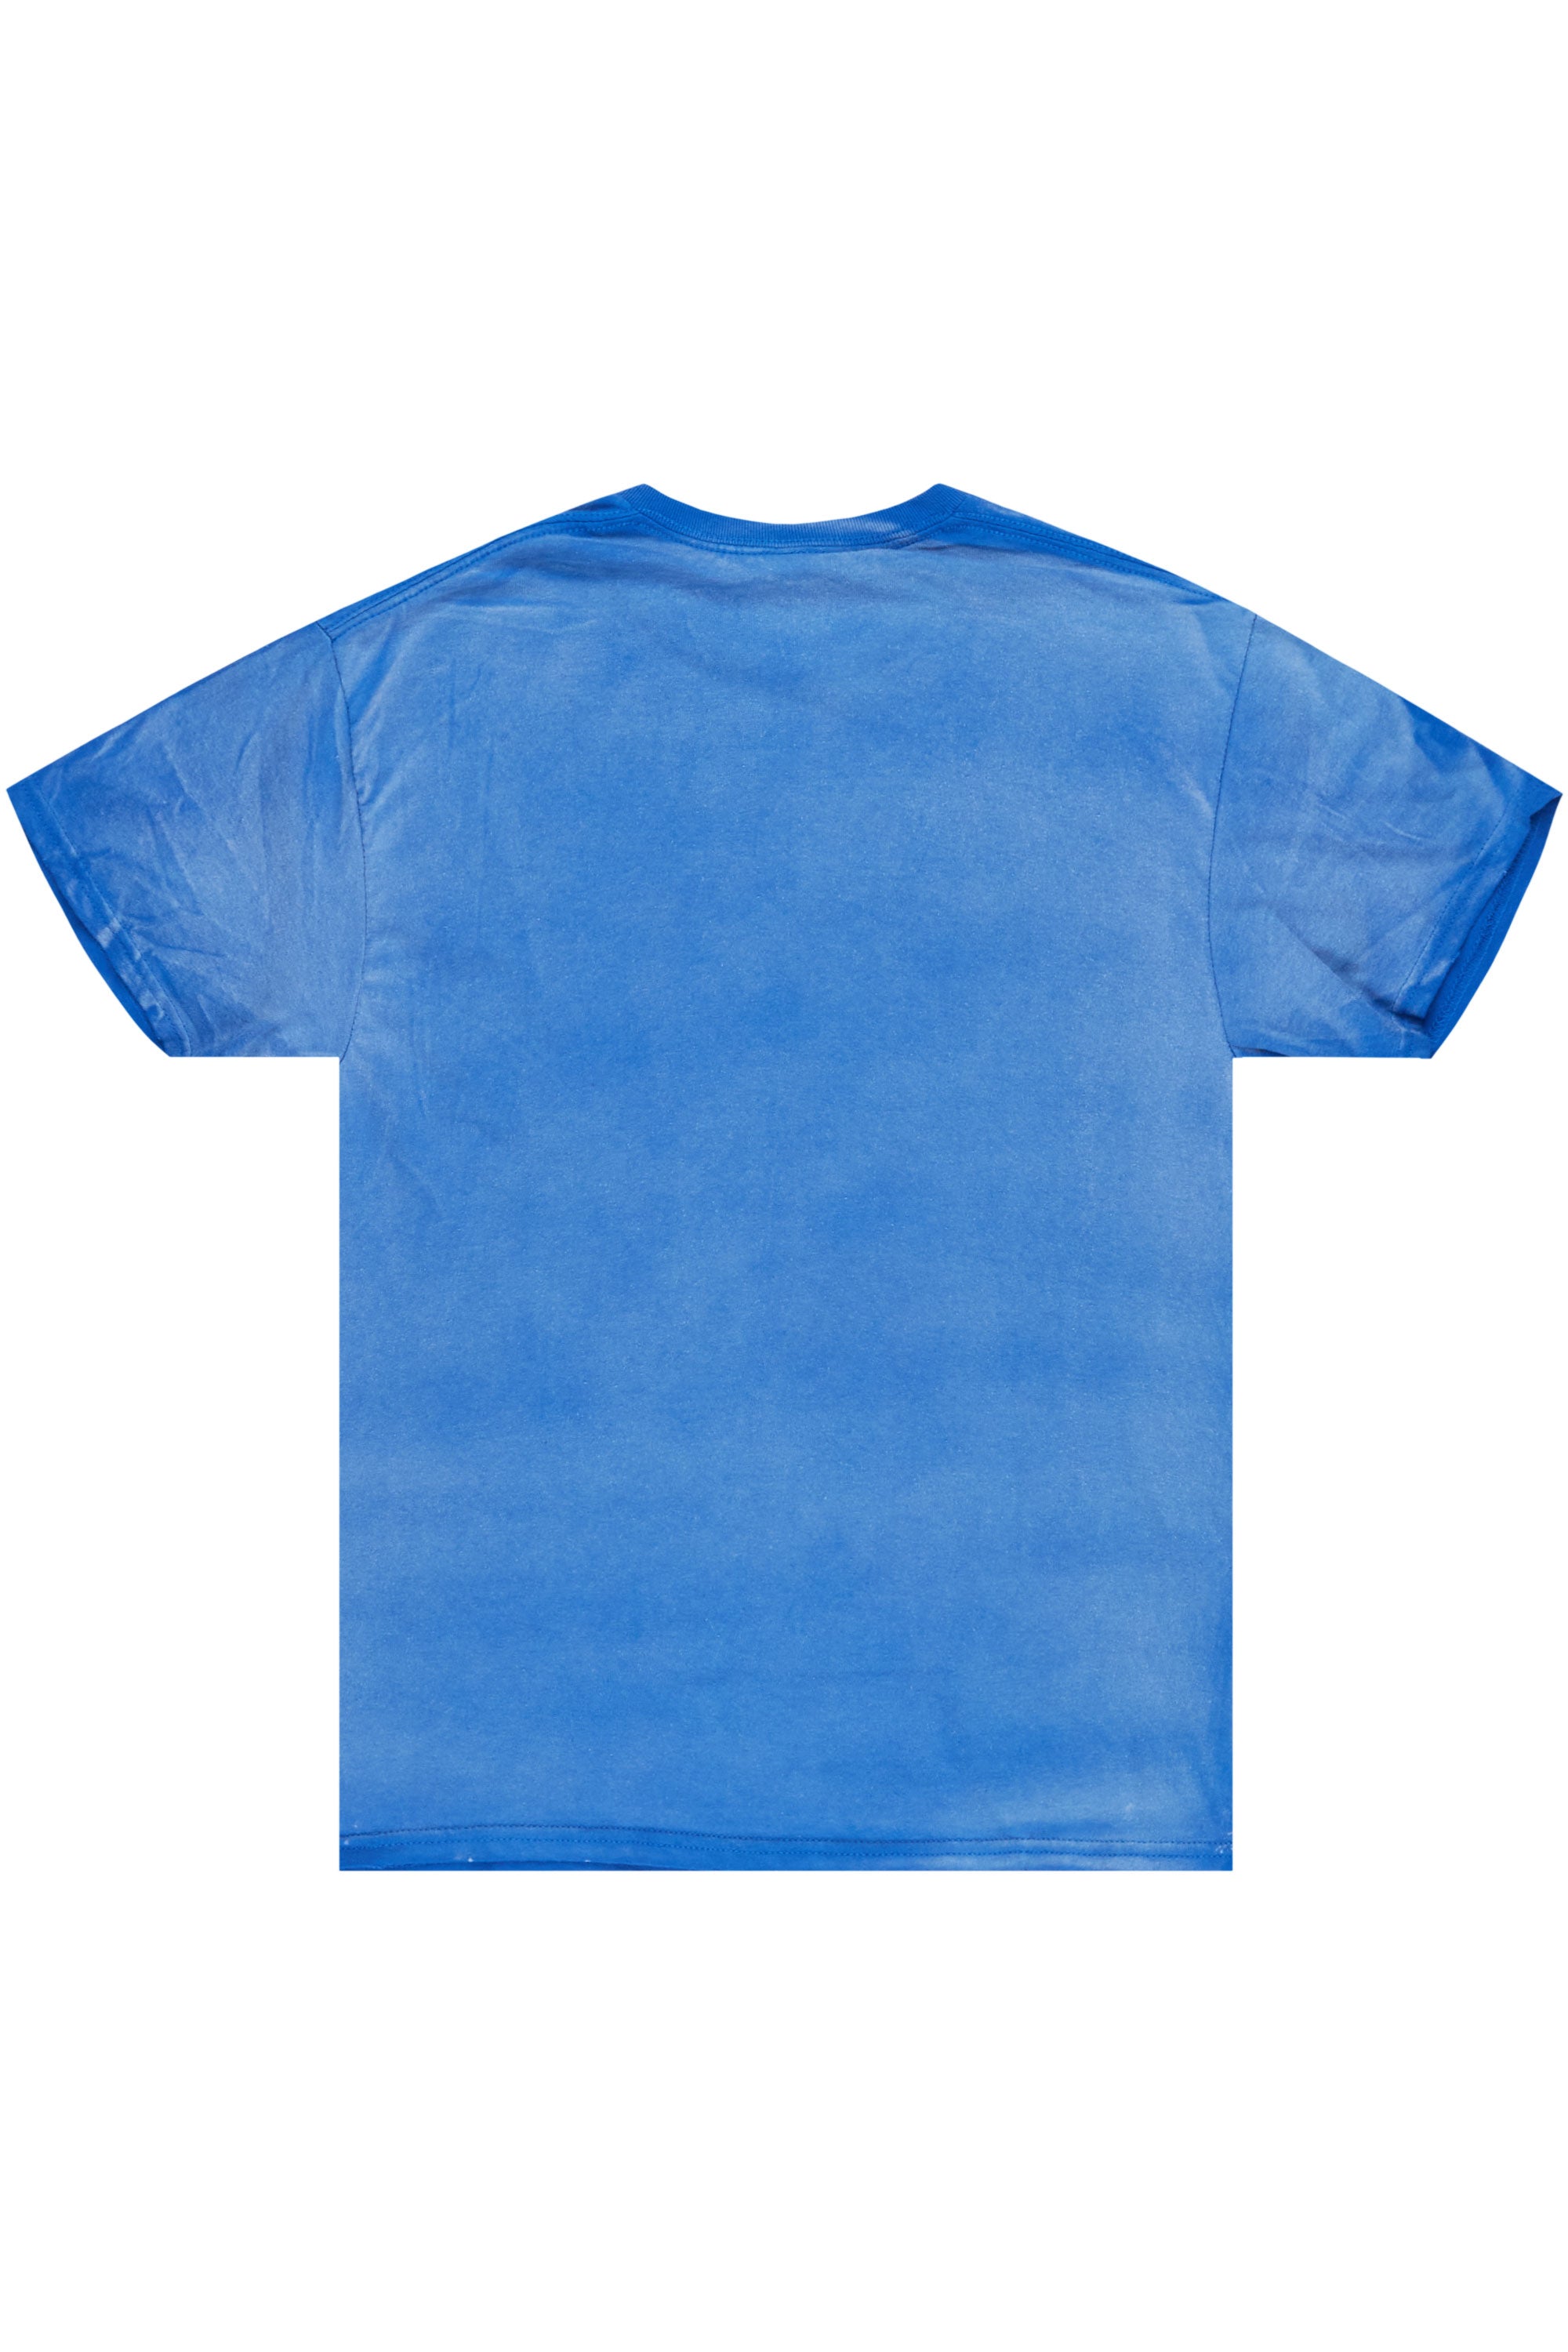 Flipt Royal Blue Graphic T-Shirt